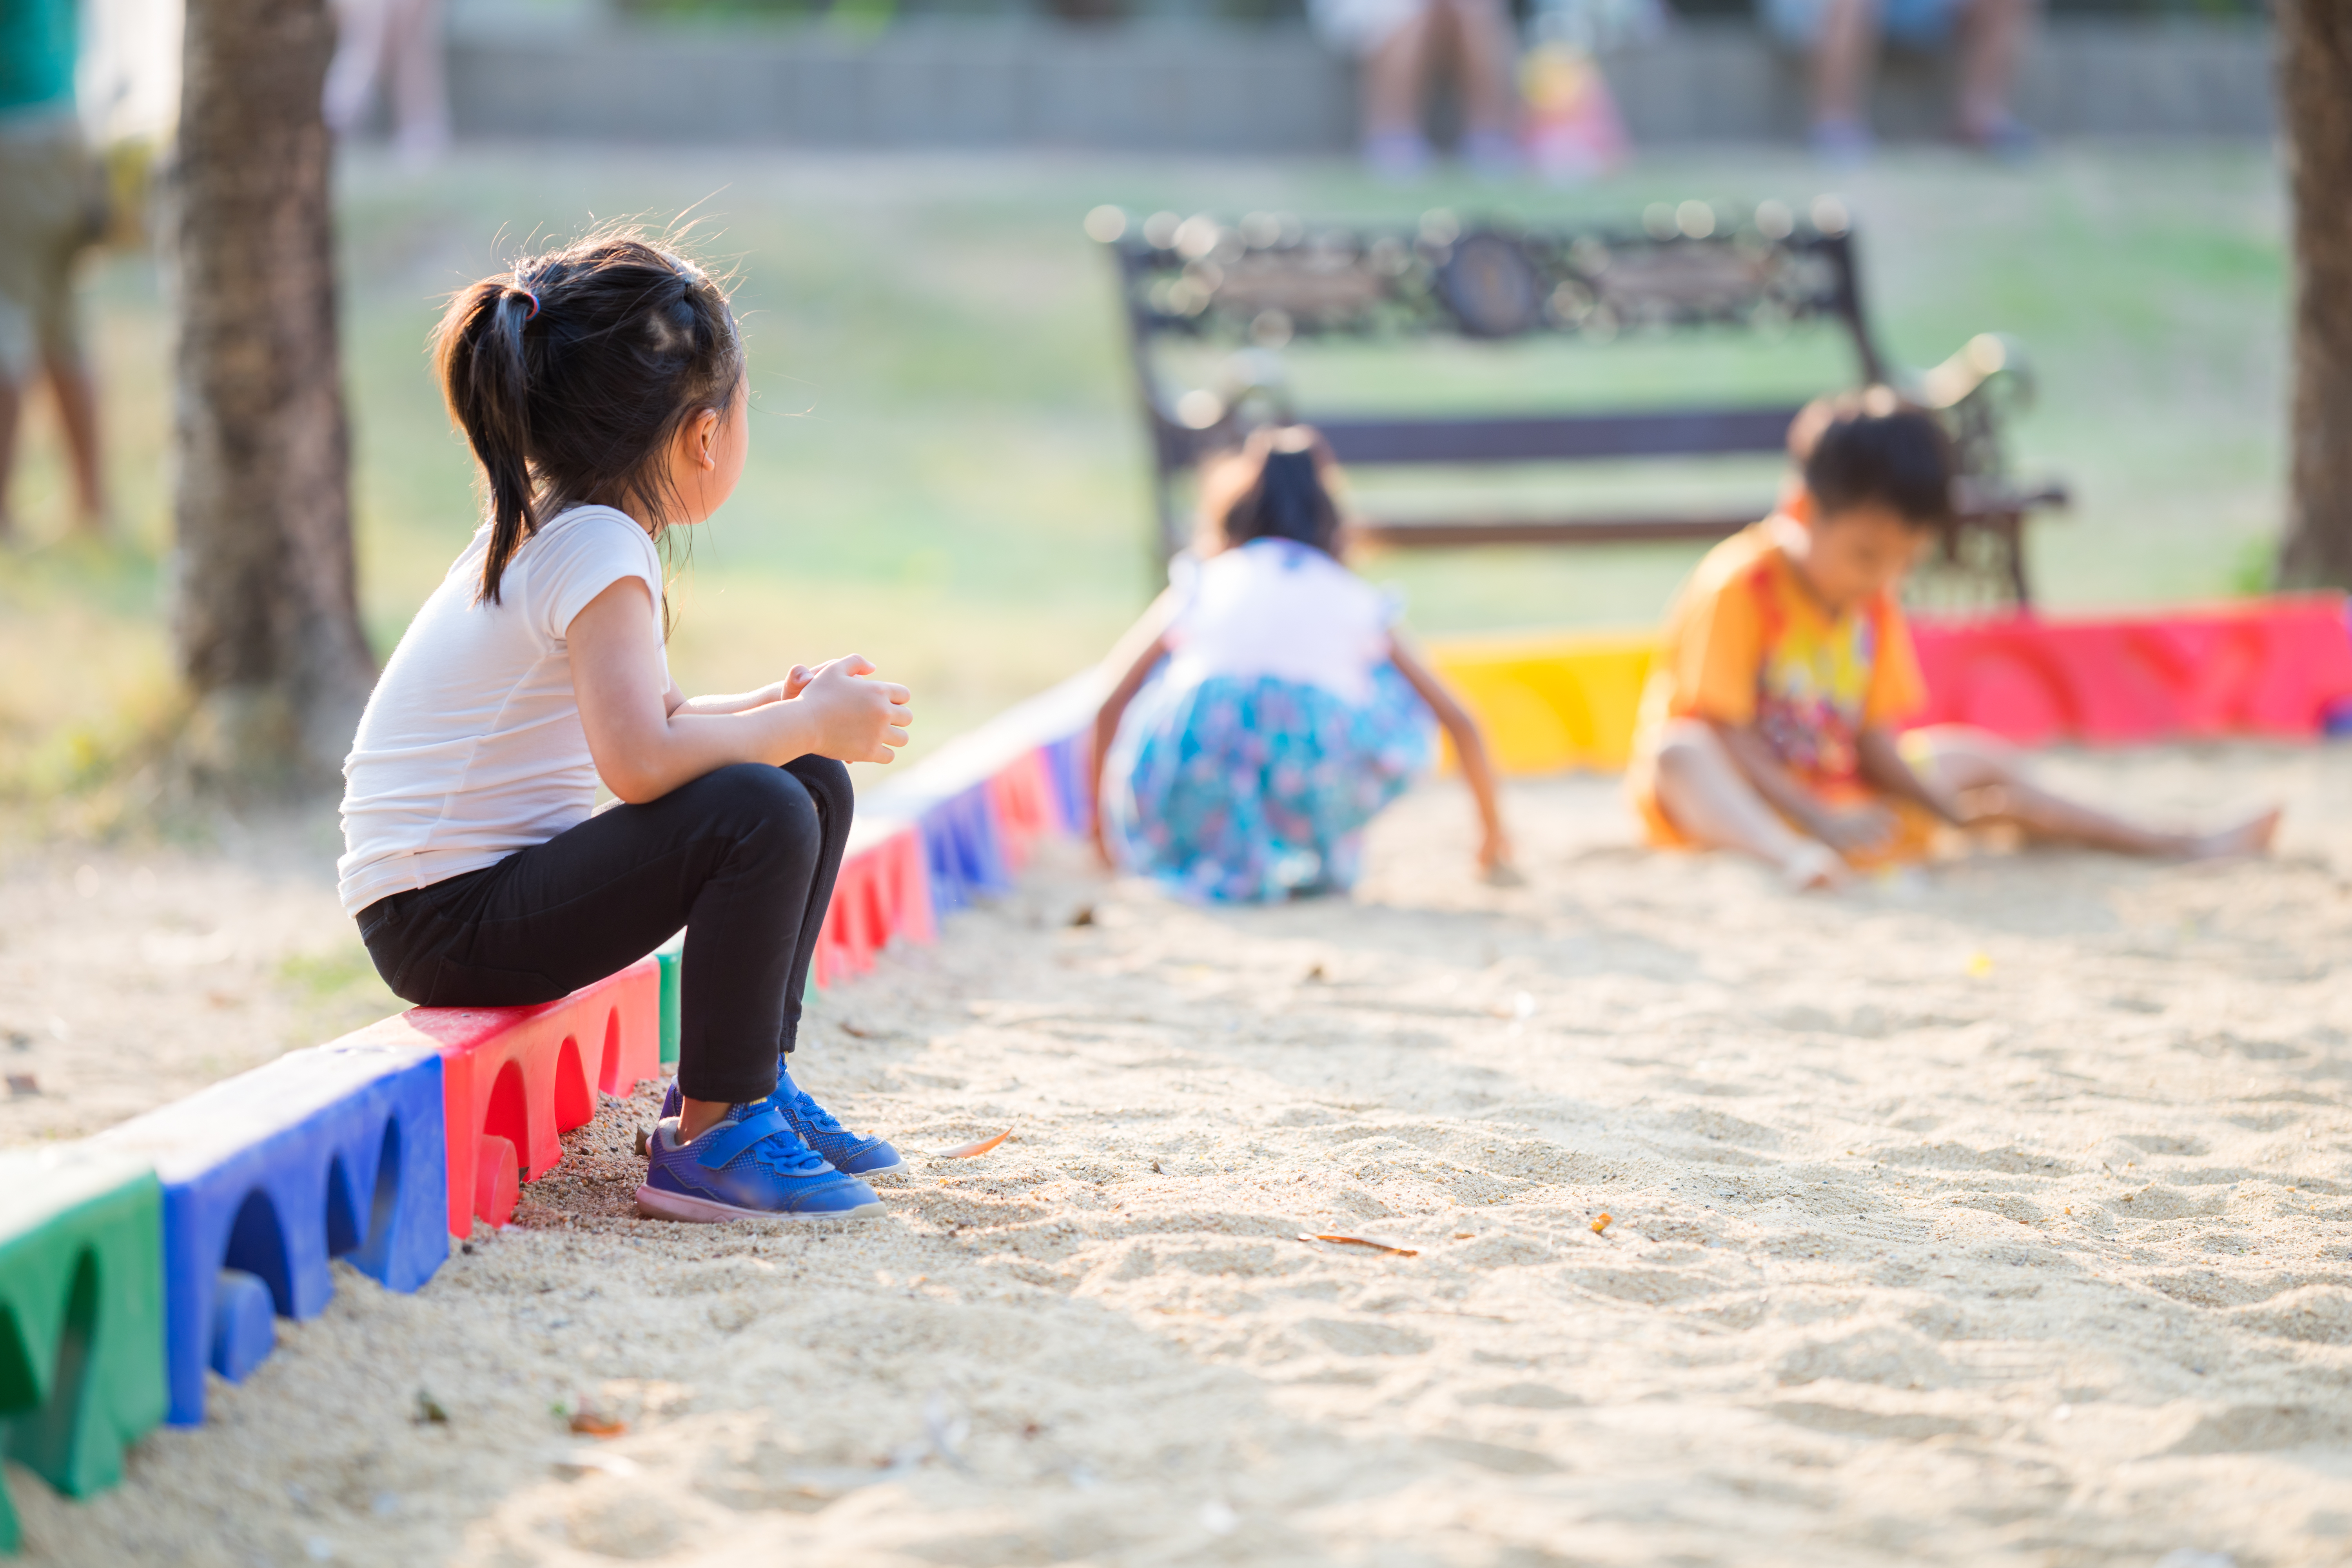 Children alone on the playground | Source: Shutterstock